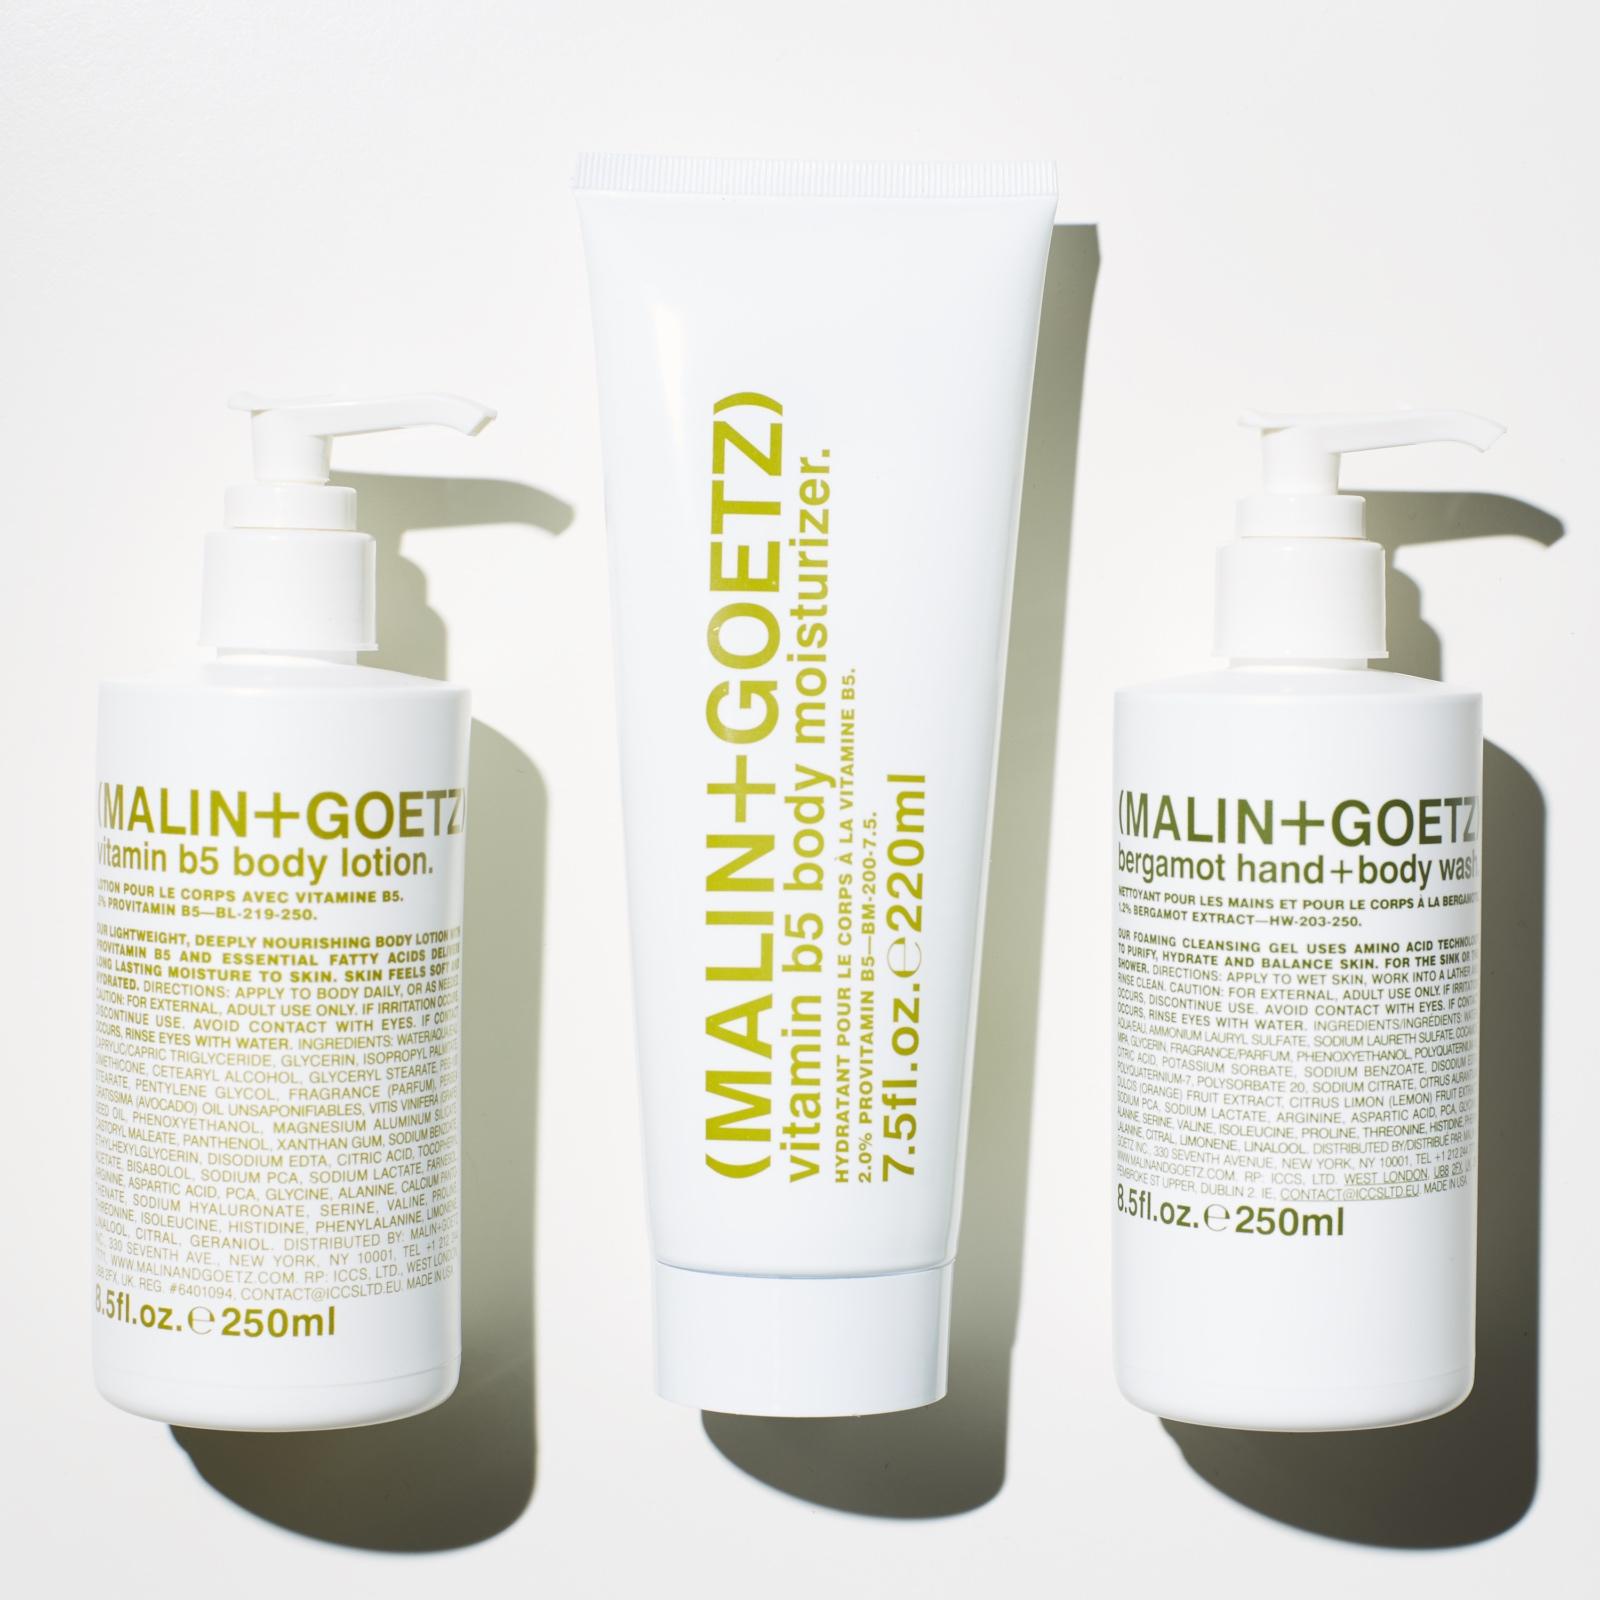 Malin + goetz collection | Perfume Lounge